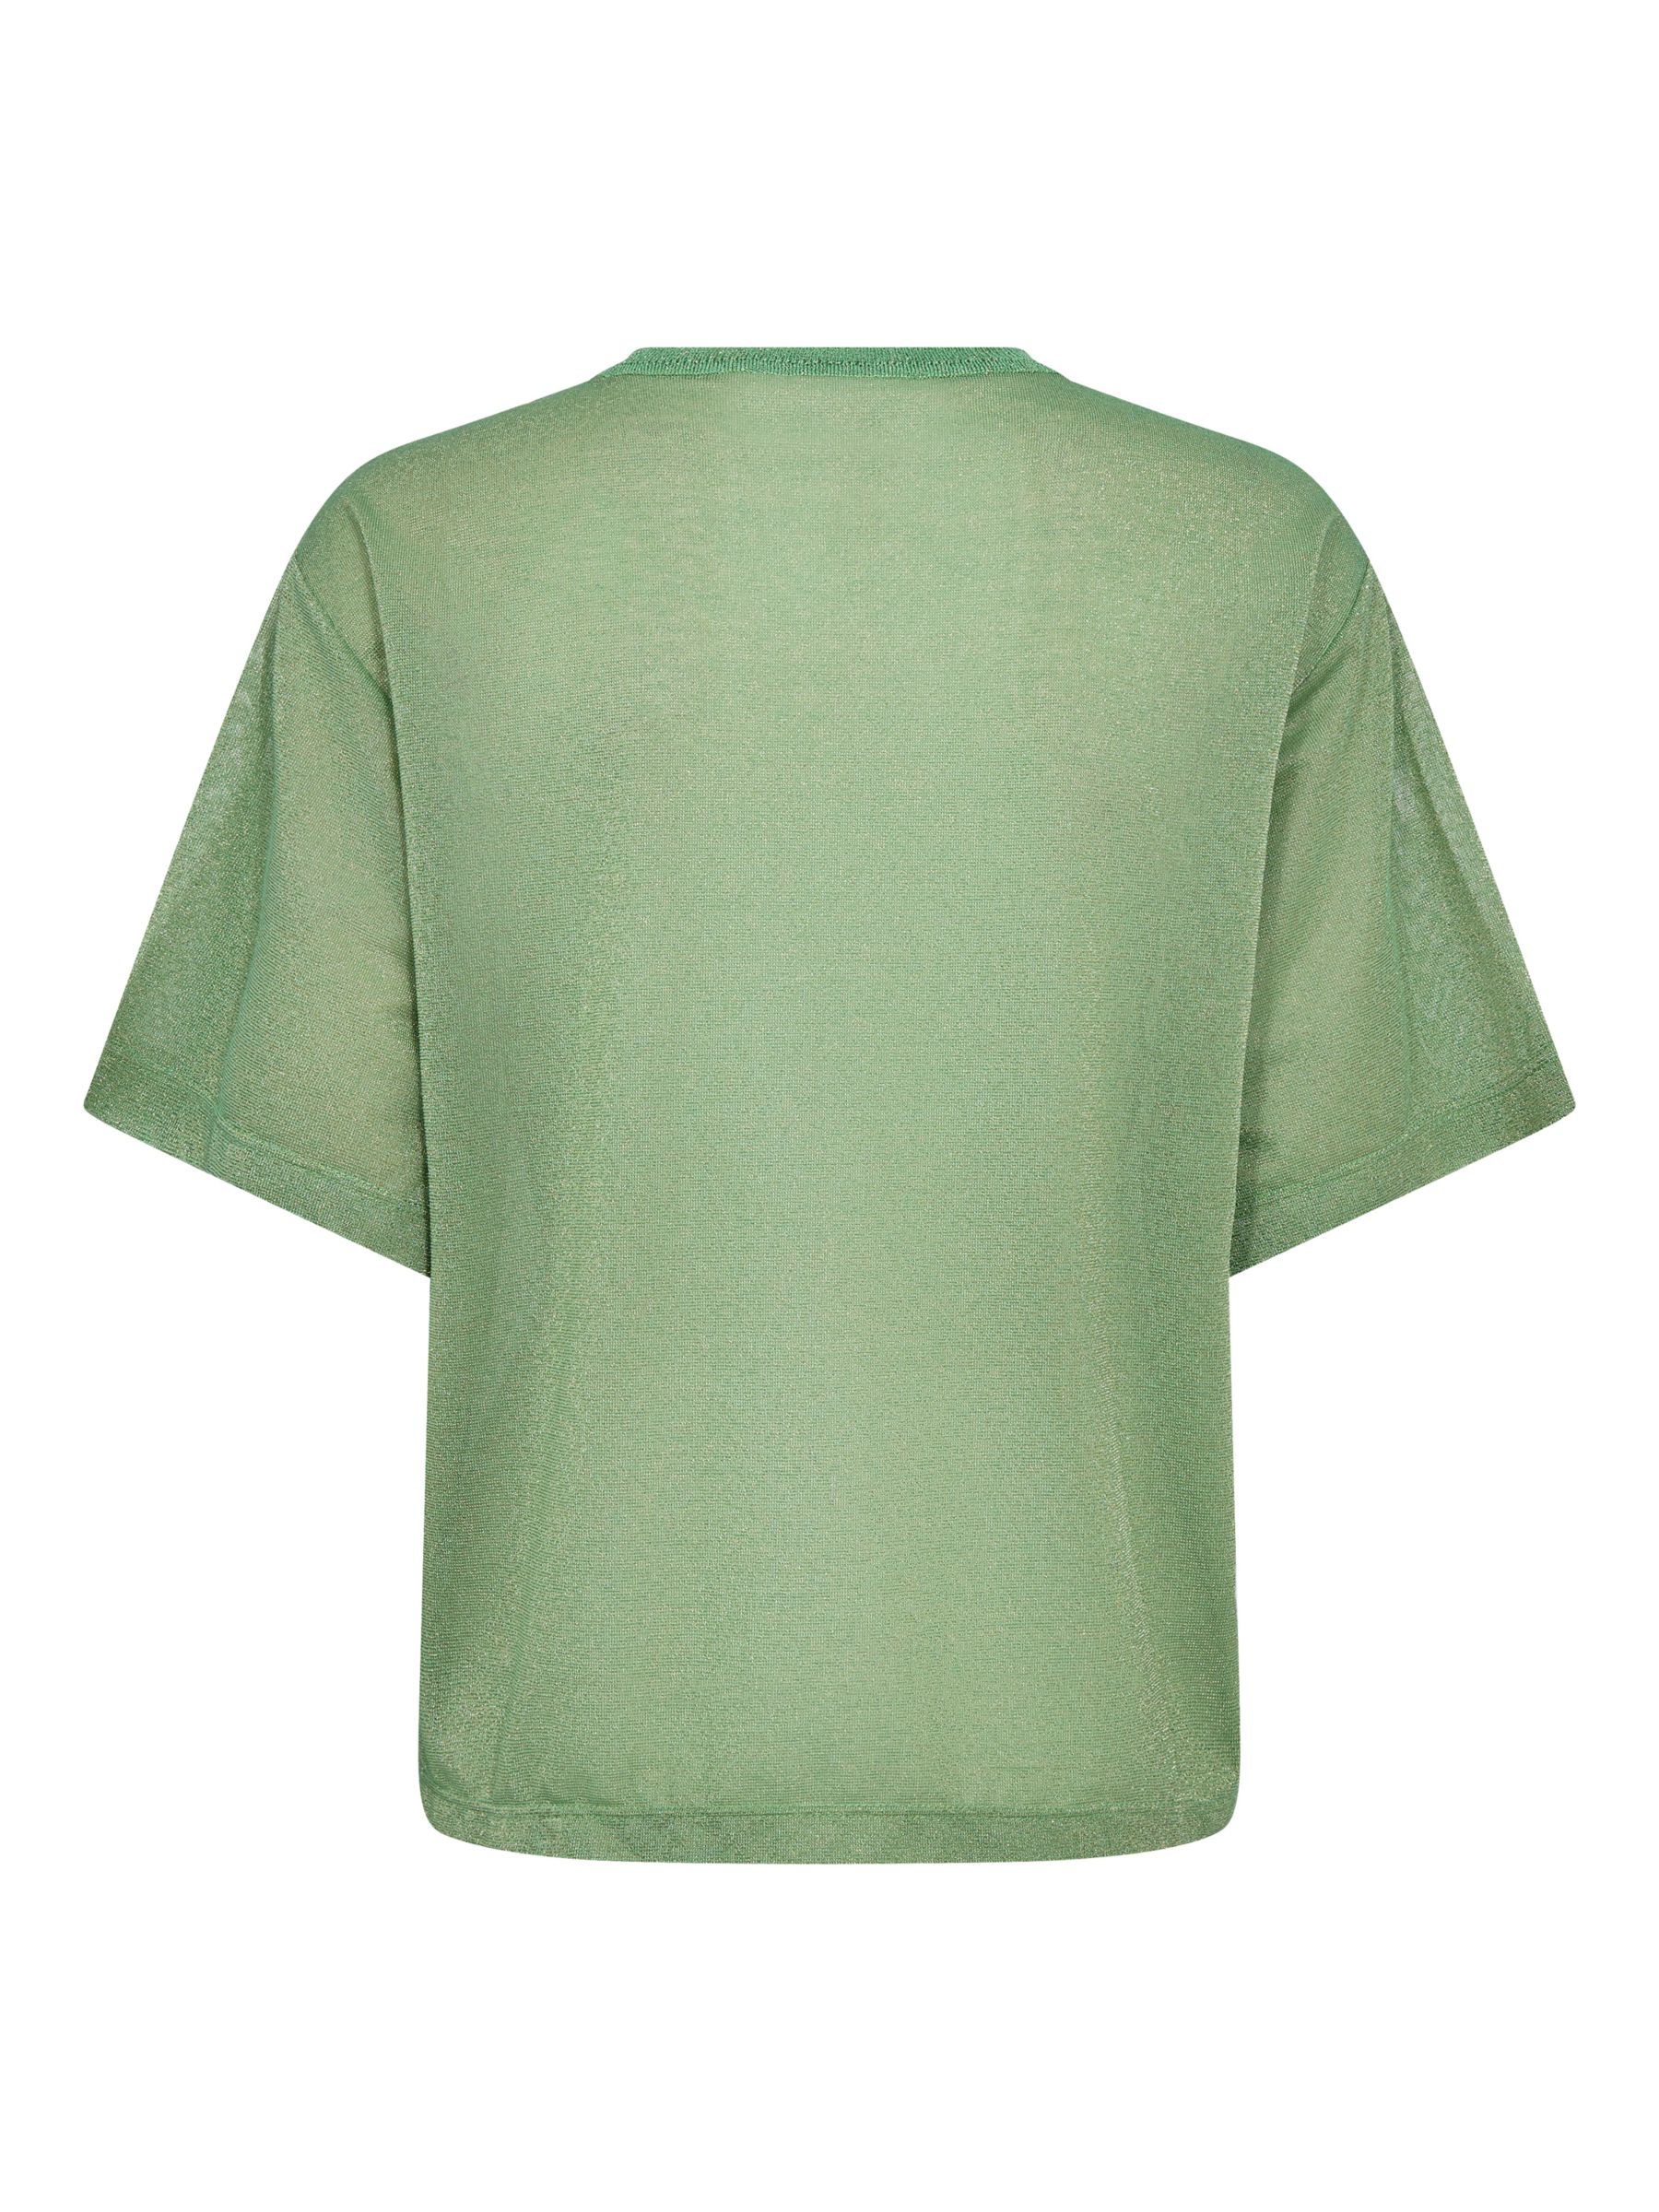 MOS MOSH Kit Metallic T-Shirt, Zephyr Green at John Lewis & Partners